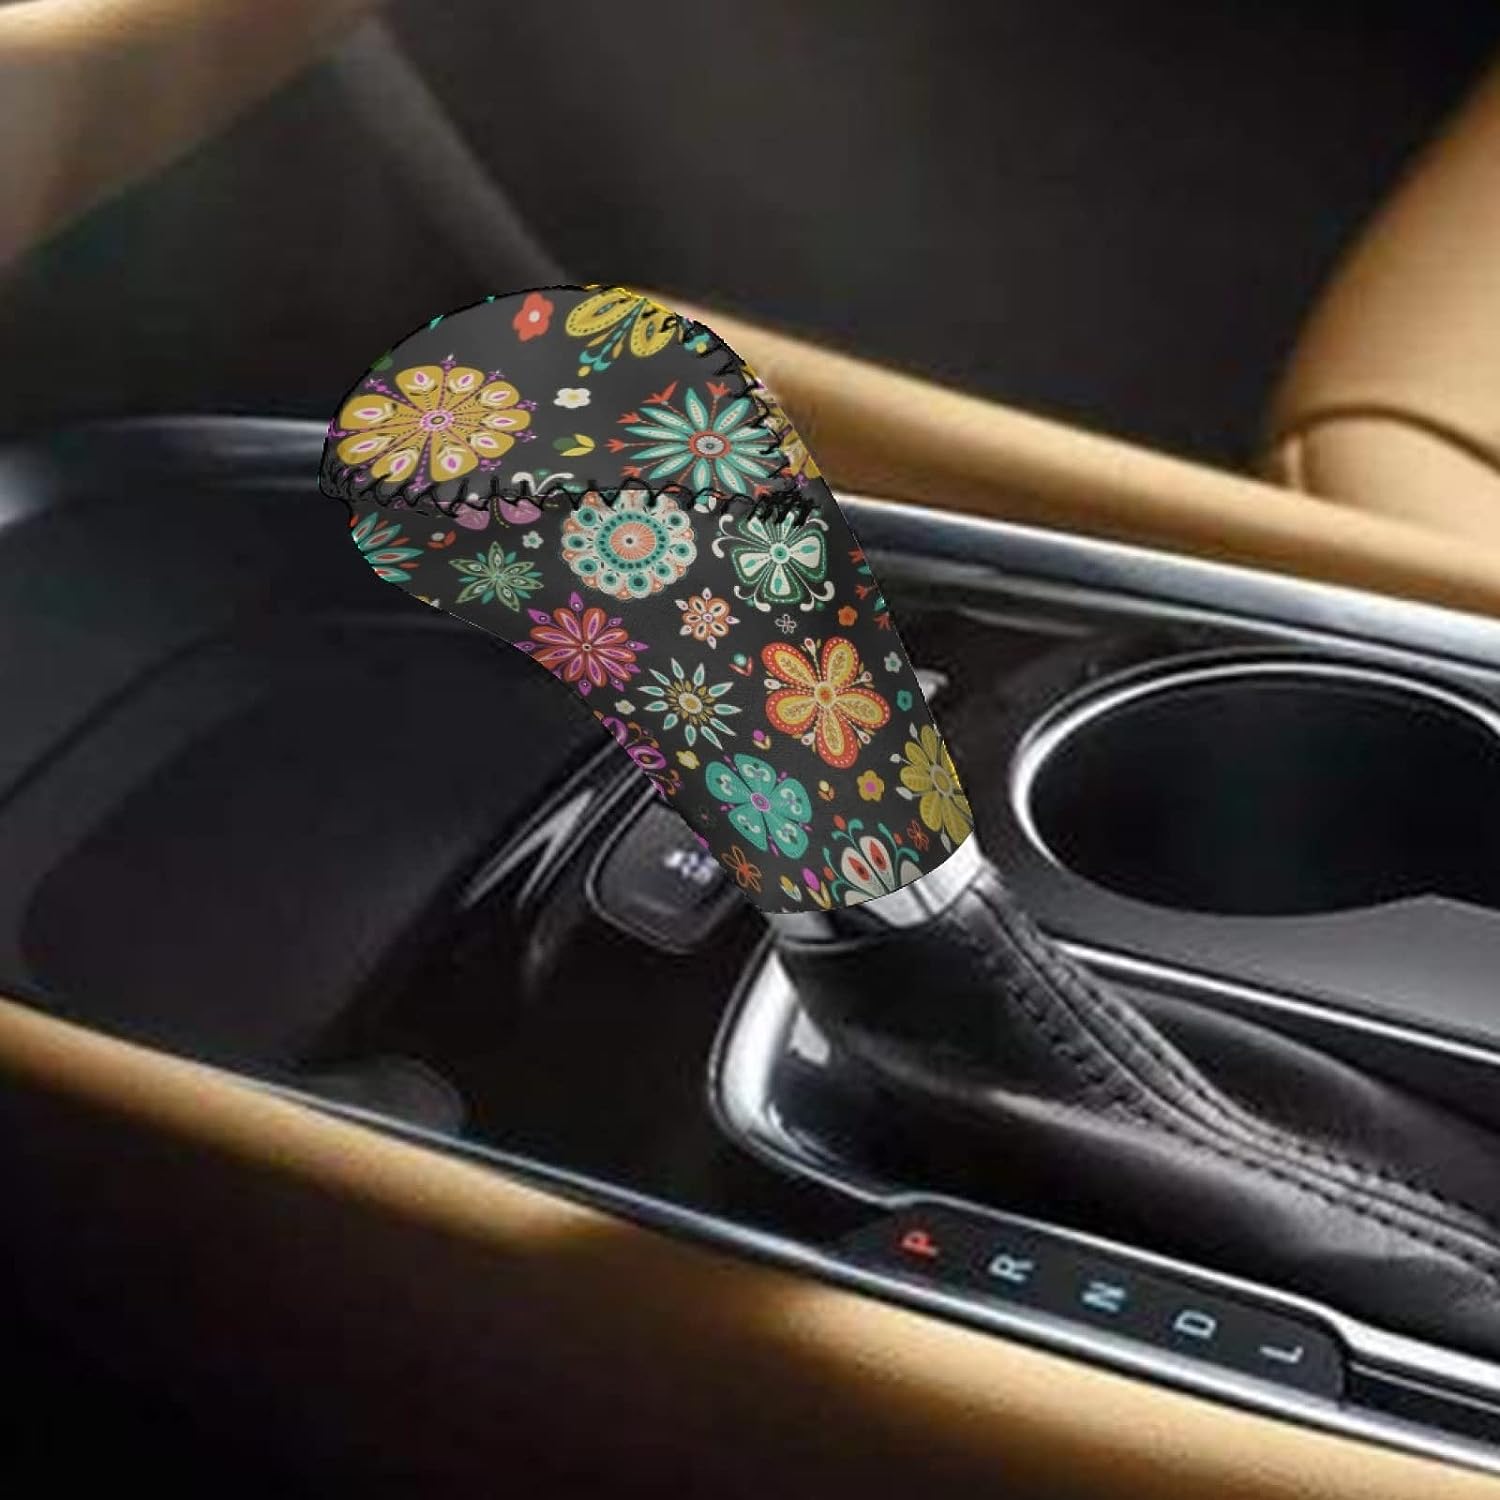 Dustproof Car Shift Knob Cover, Protects Gear Shift Knob